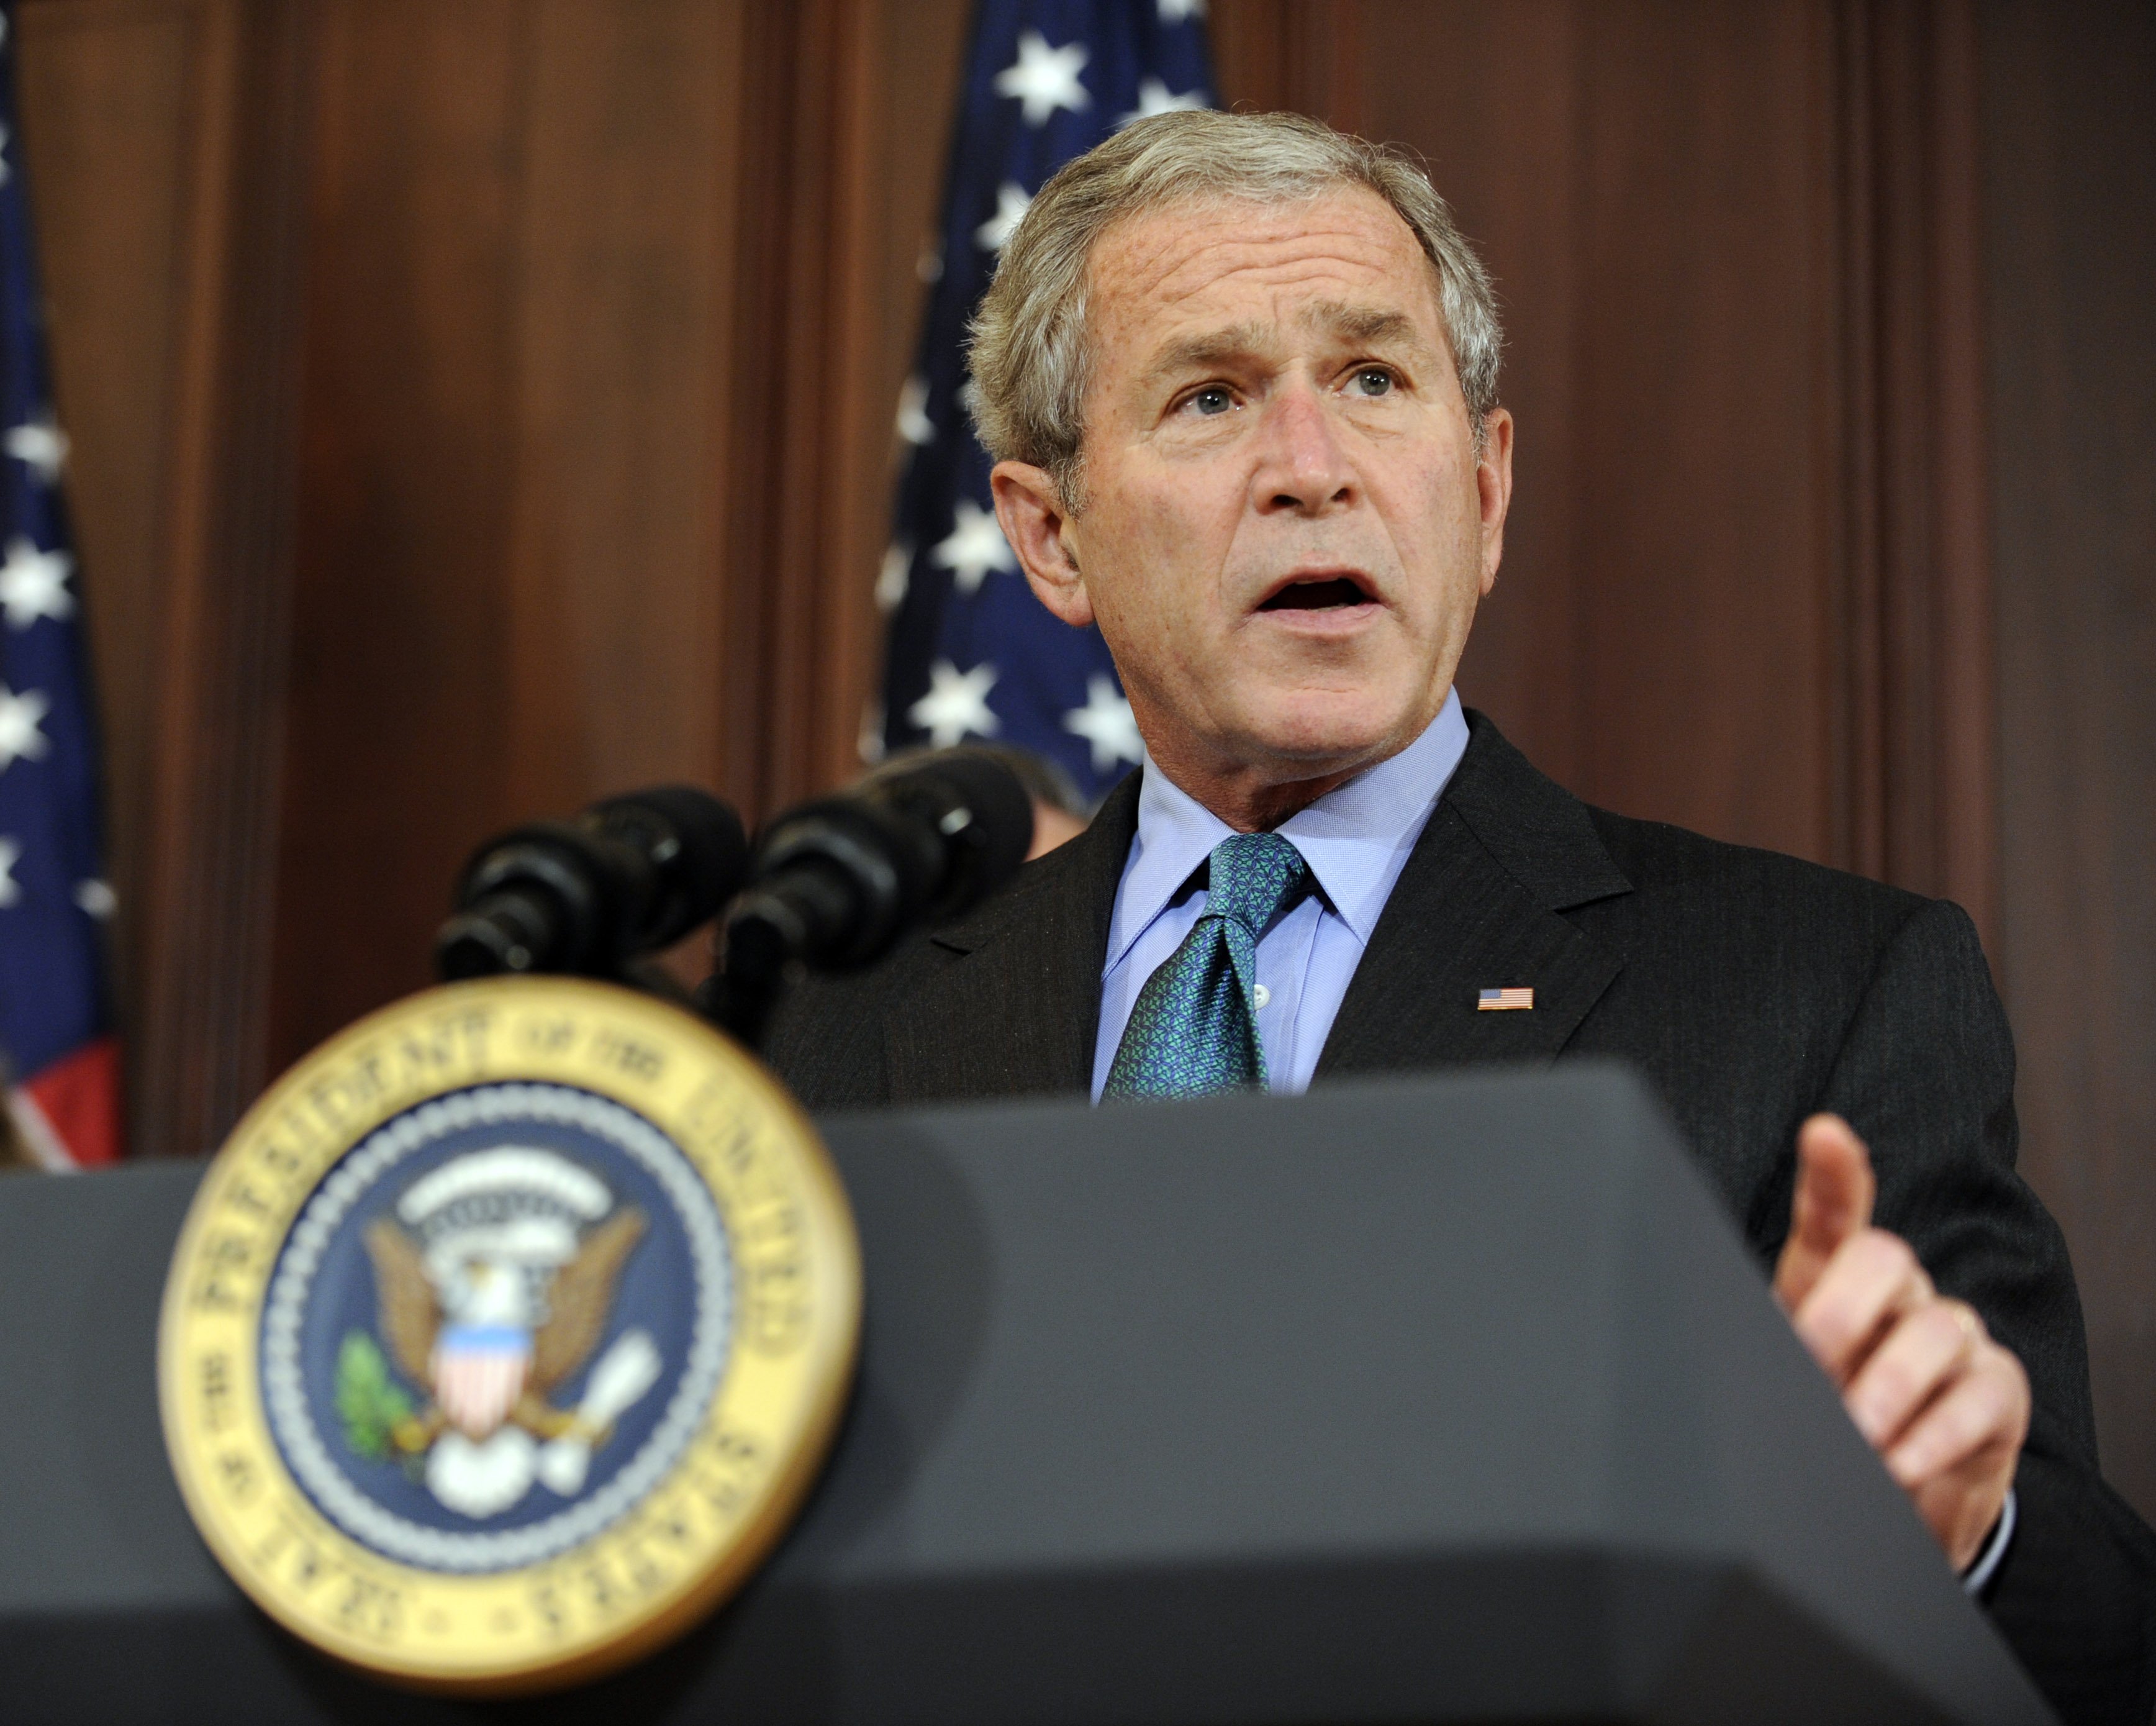 George W Bush, Krig, Barack Obama, Brott och straff, Politik, USA, Wikileaks